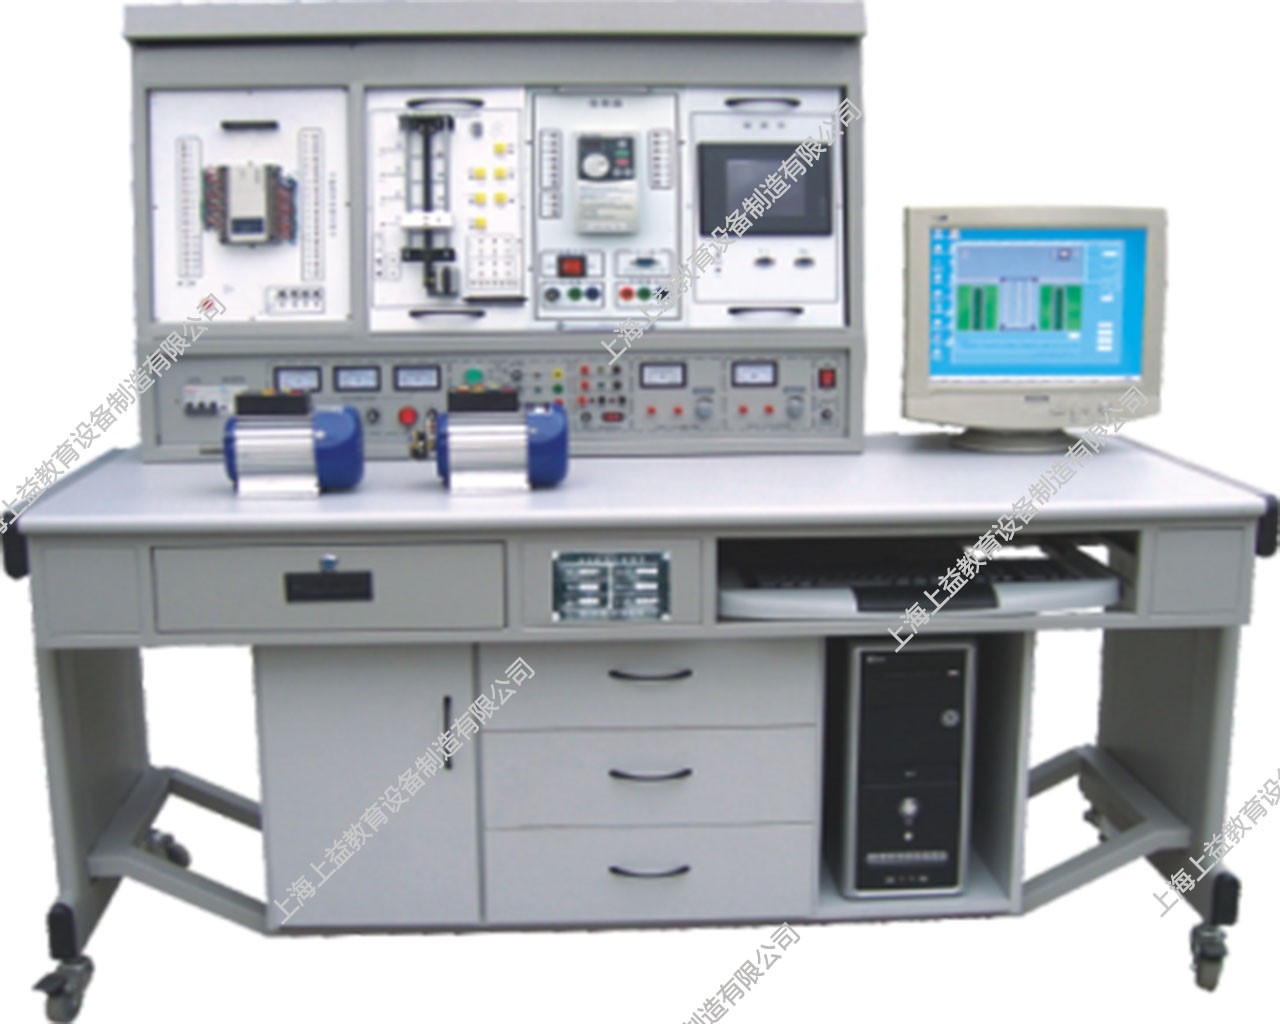 SYPLC-04C 網絡型PLC可編程控制器、變頻調速、電氣控制及微機接口與微機應用綜合實驗裝置（PLC、變頻器、觸摸屏、電氣控制、微機接口）